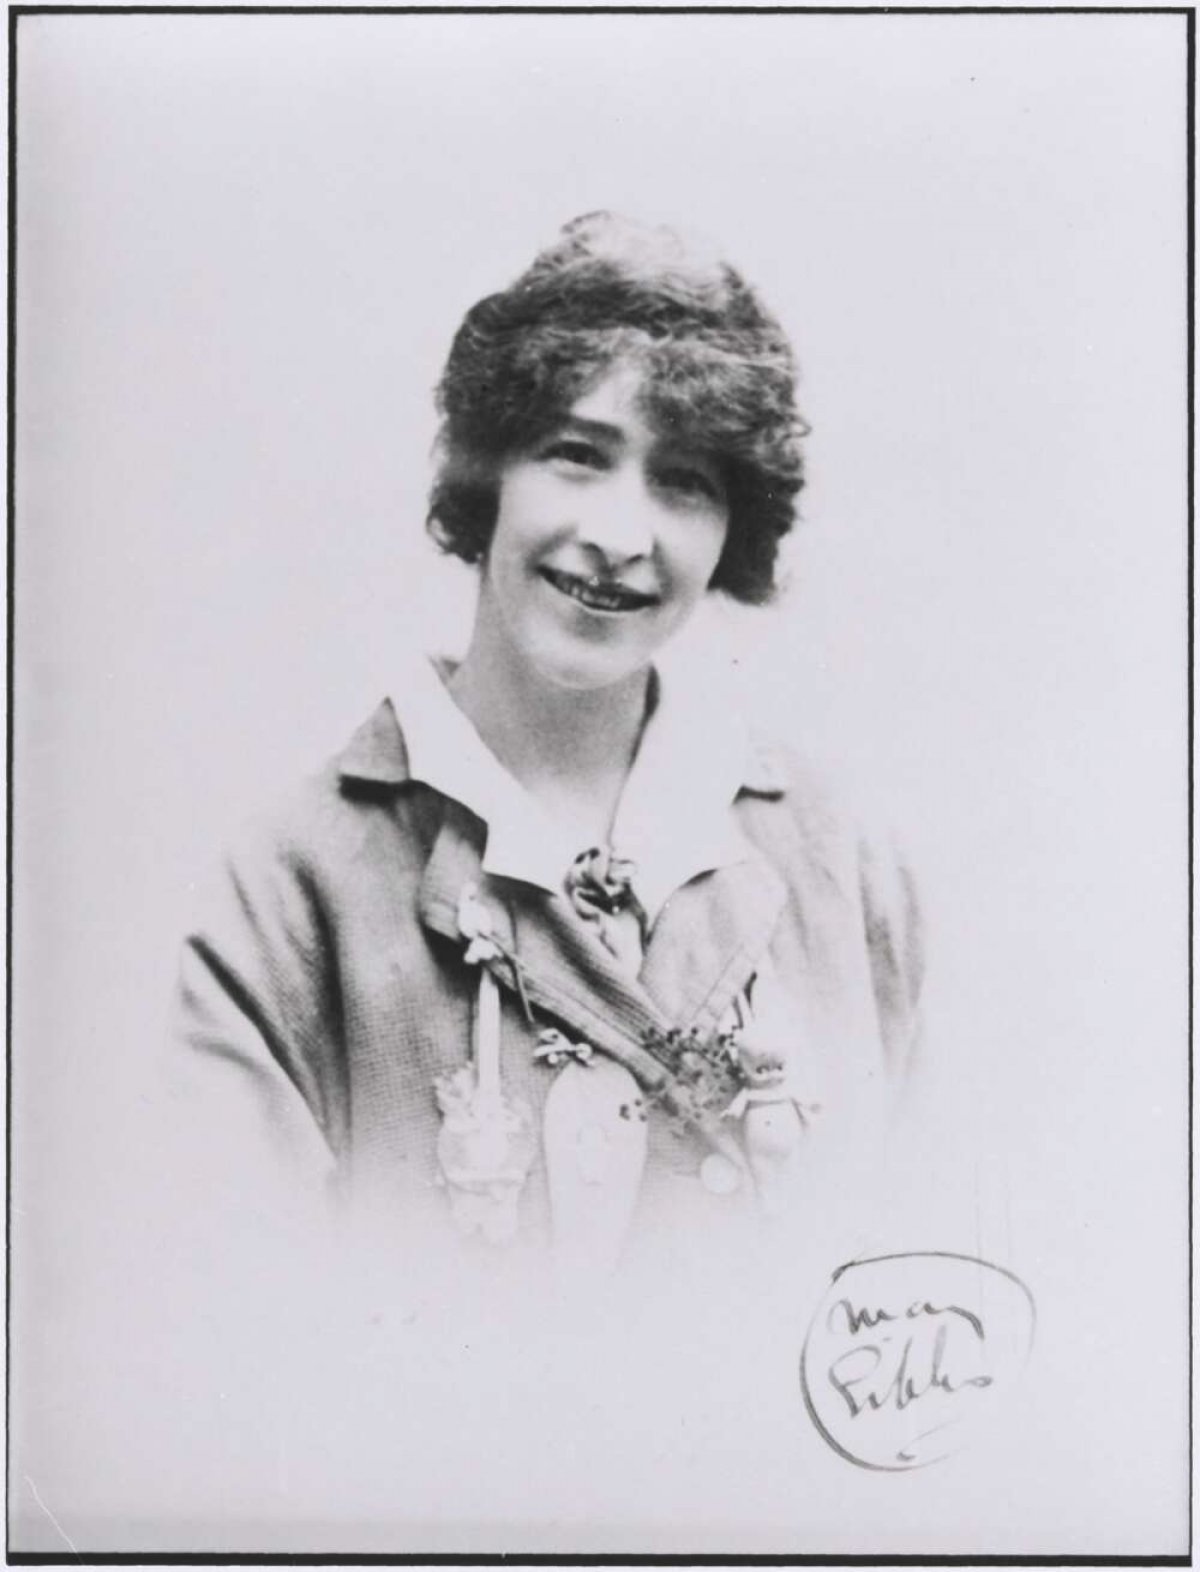 Photograph of children's author May Gibbs